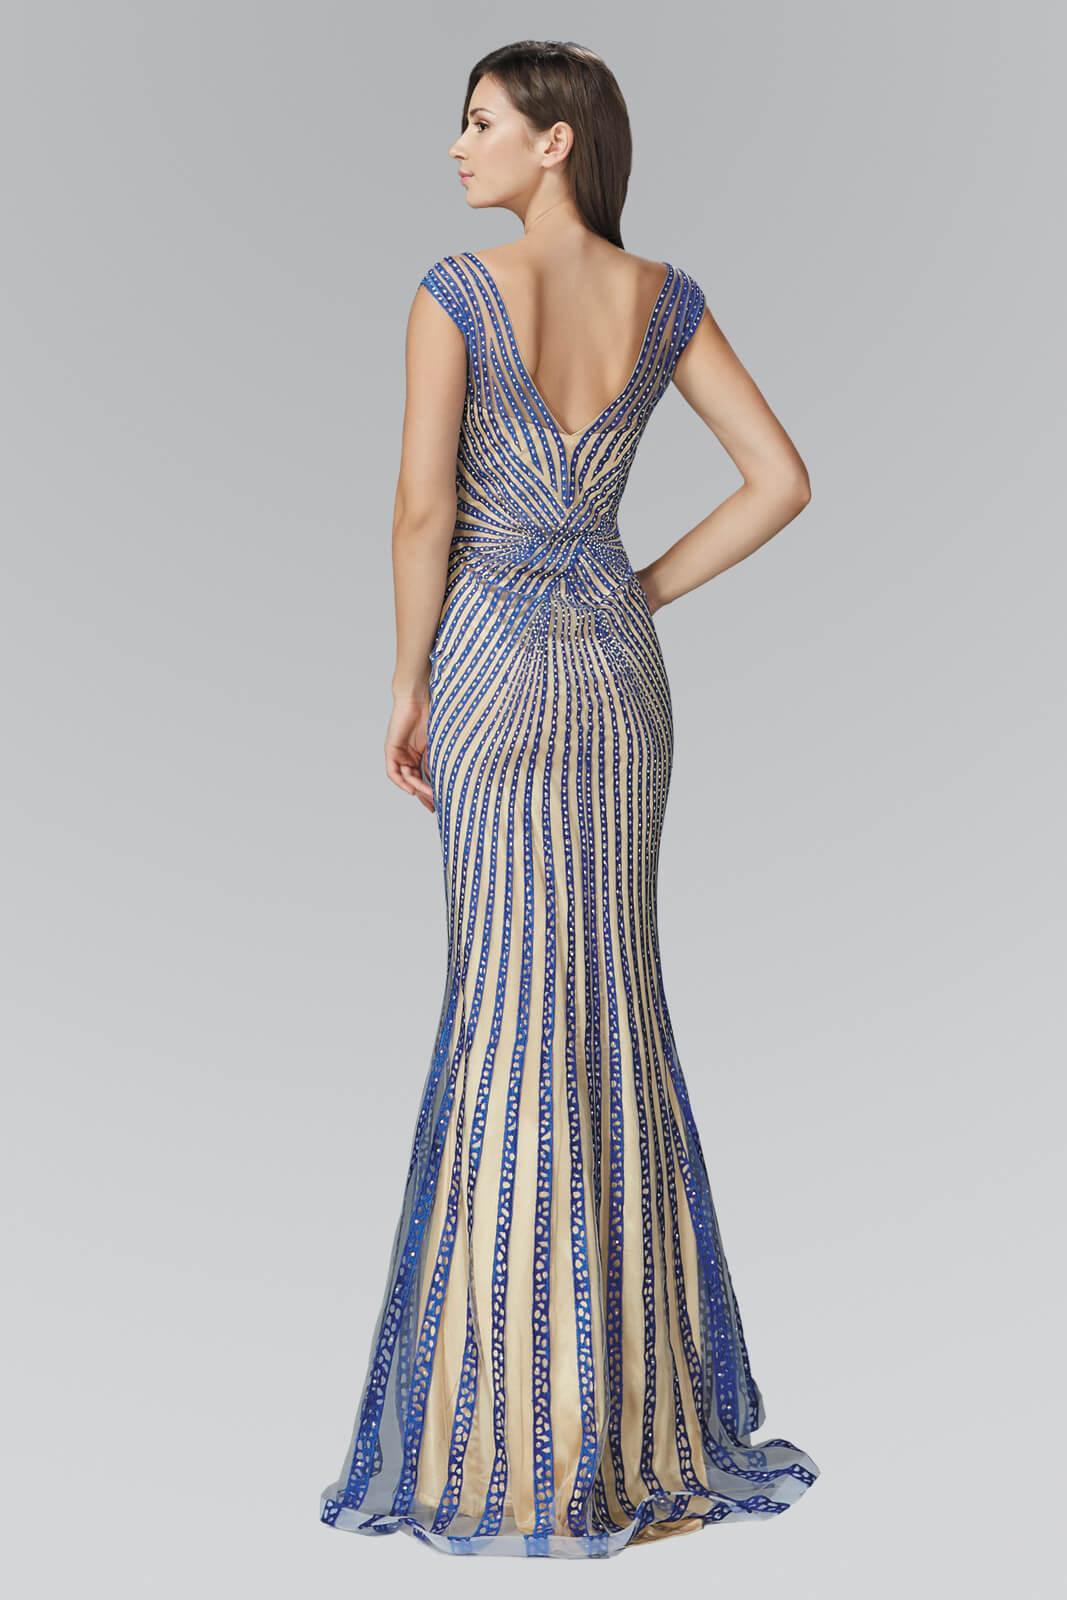 Prom Formal Beaded Dress Evening Gown - The Dress Outlet Elizabeth K